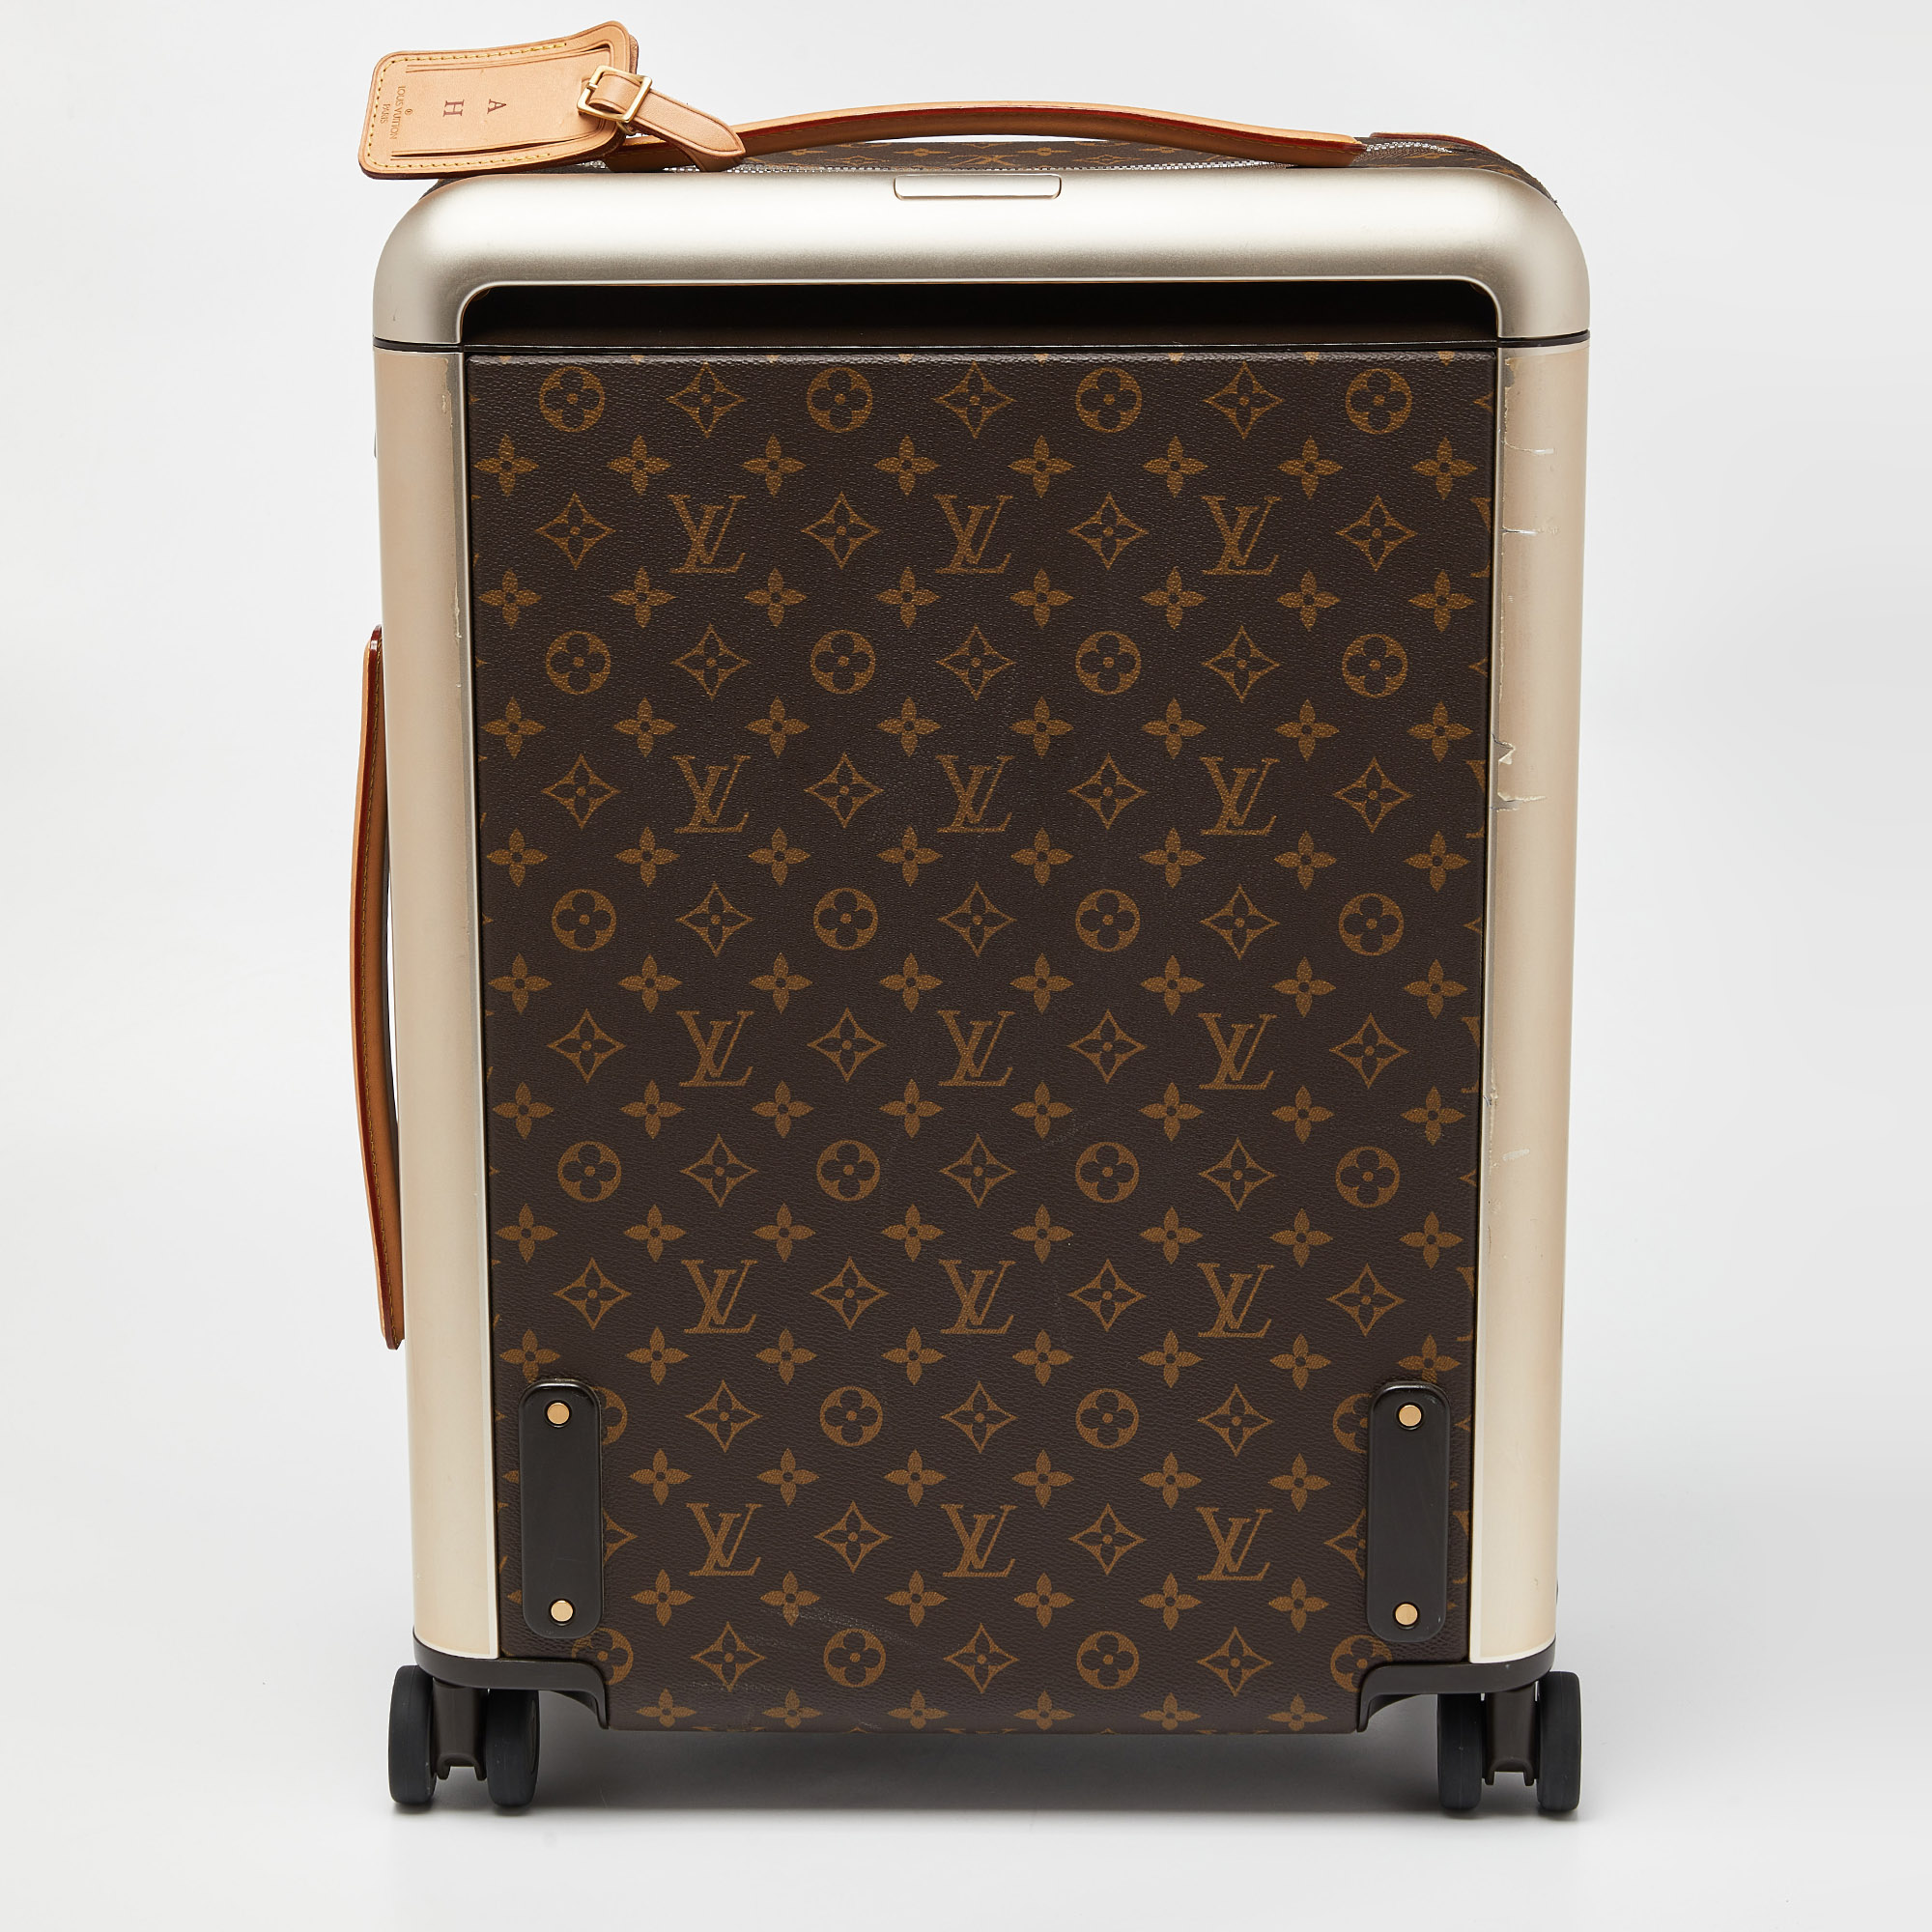 Louis Vuitton Monogram Canvas Horizon 50 Suitcase